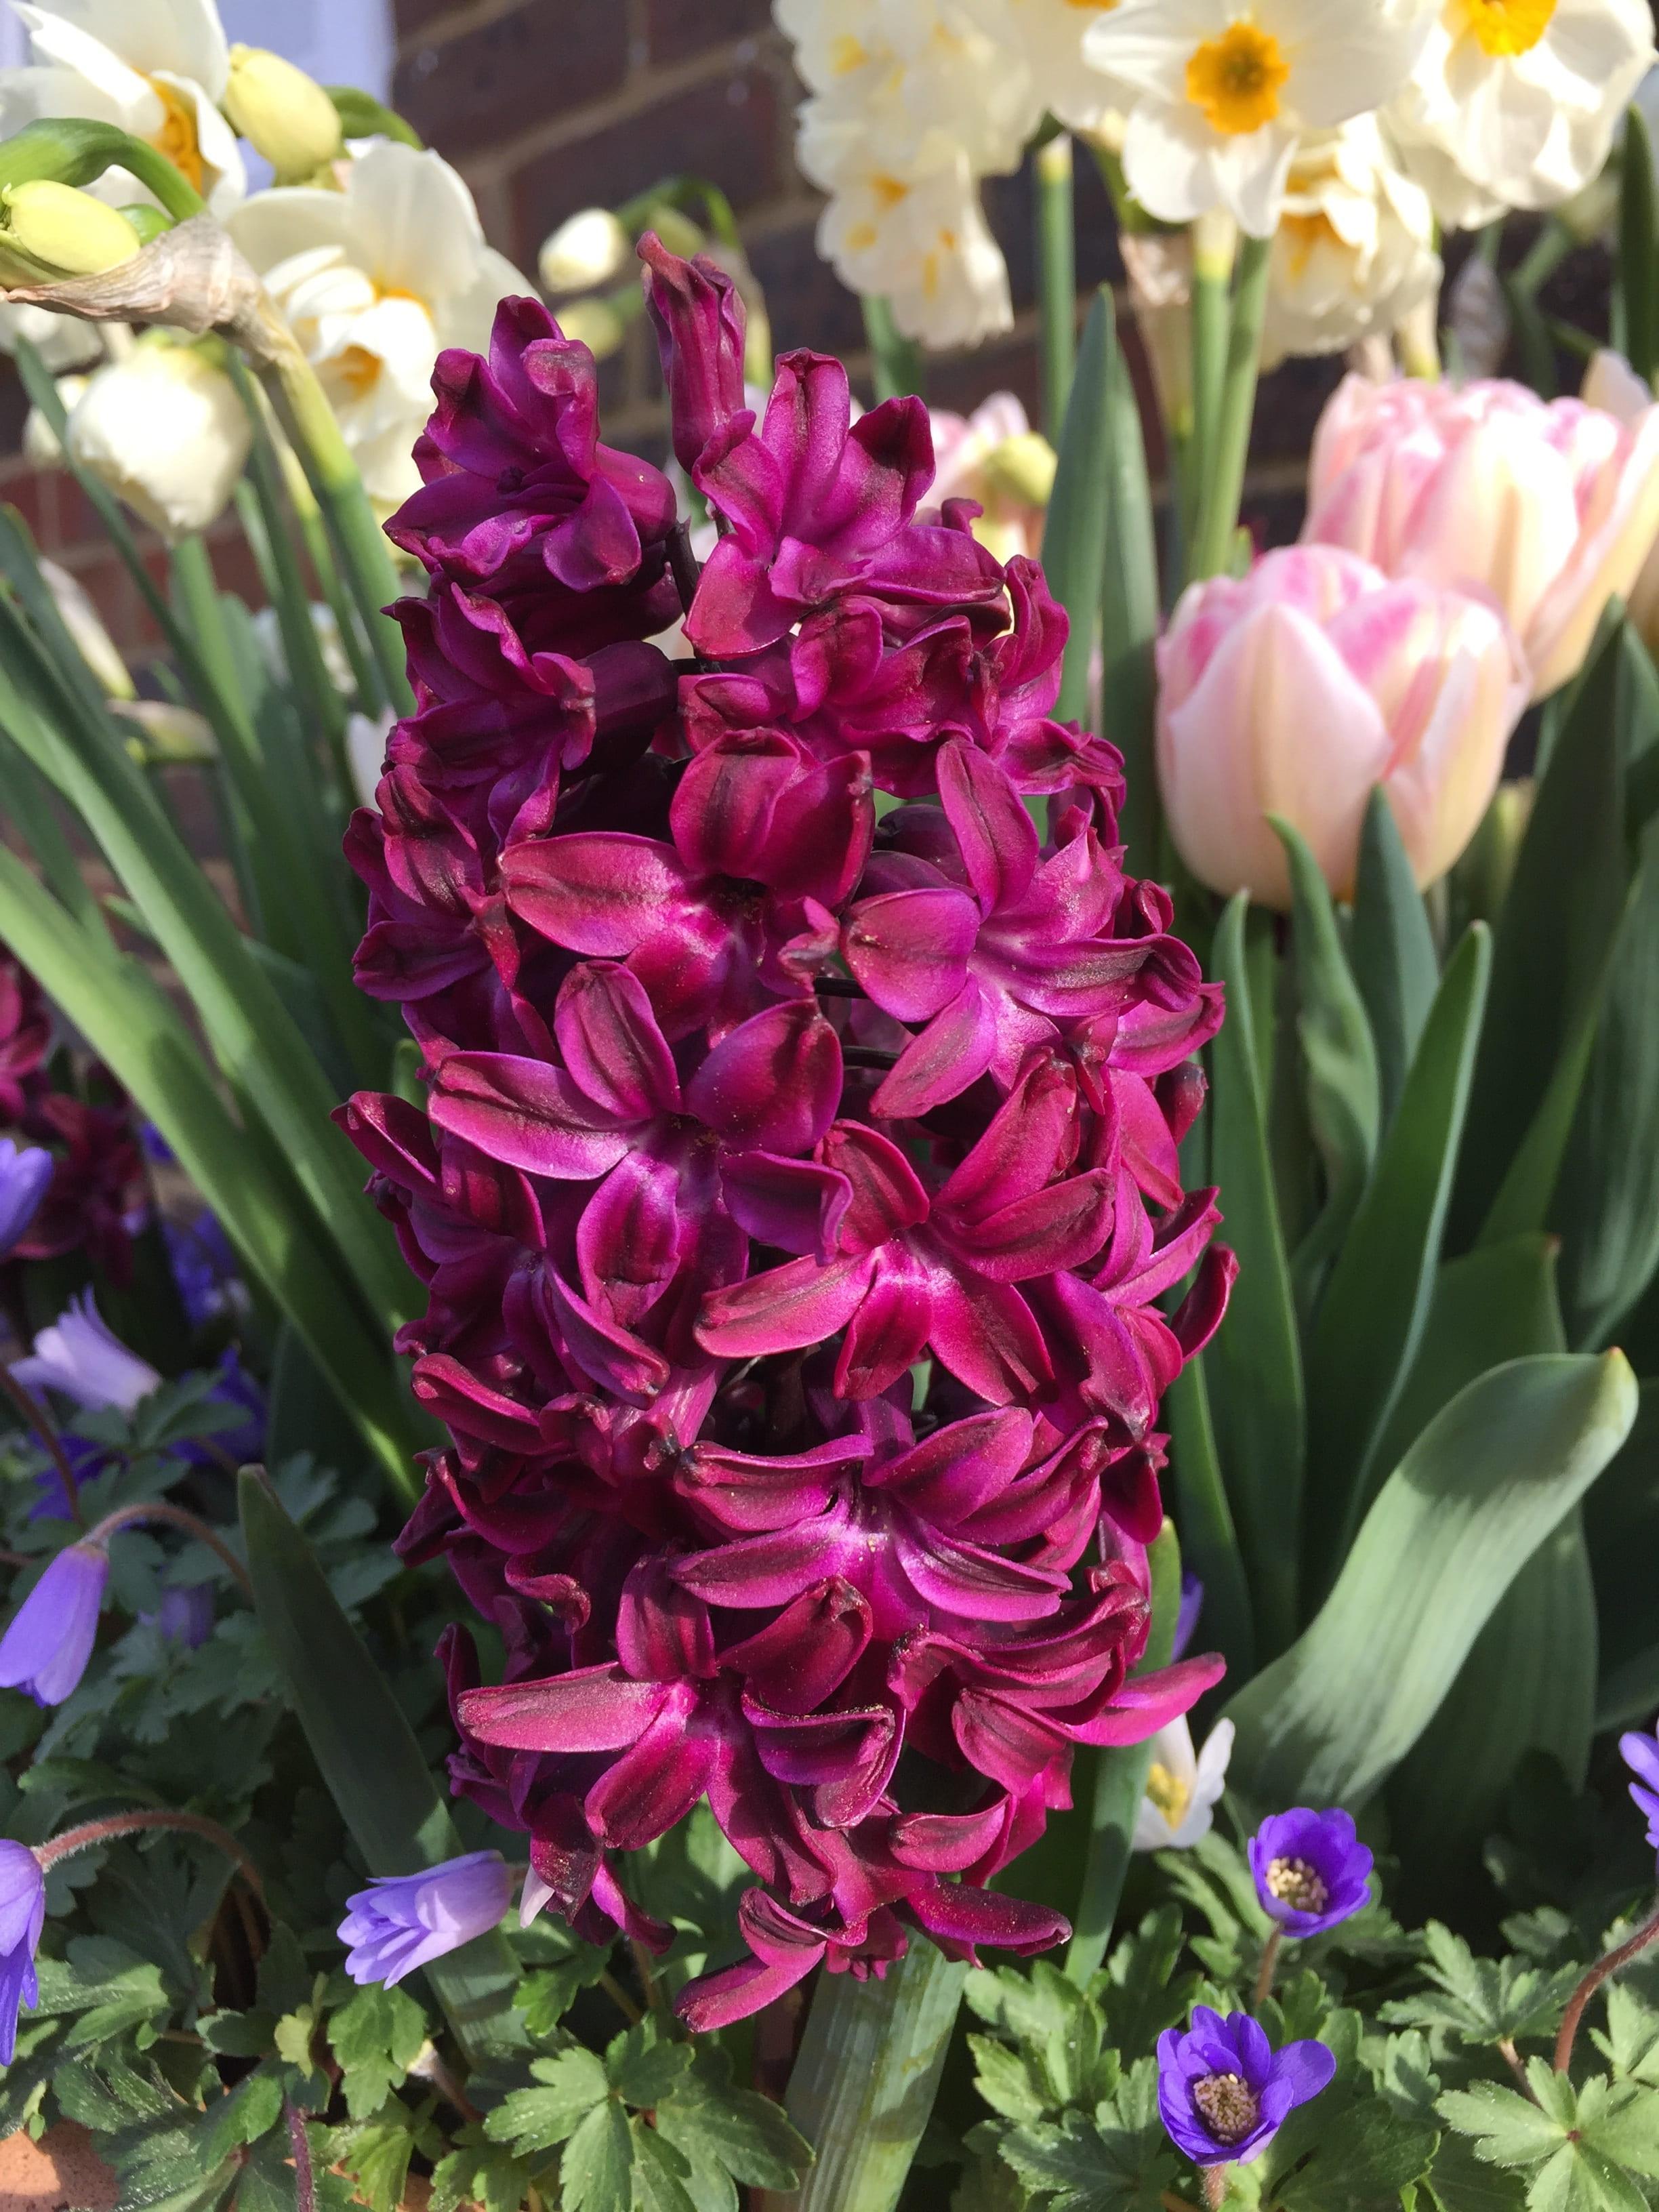 Hyacinth 'Woodstock' - Hyacinth from Leo Berbee Bulb Company